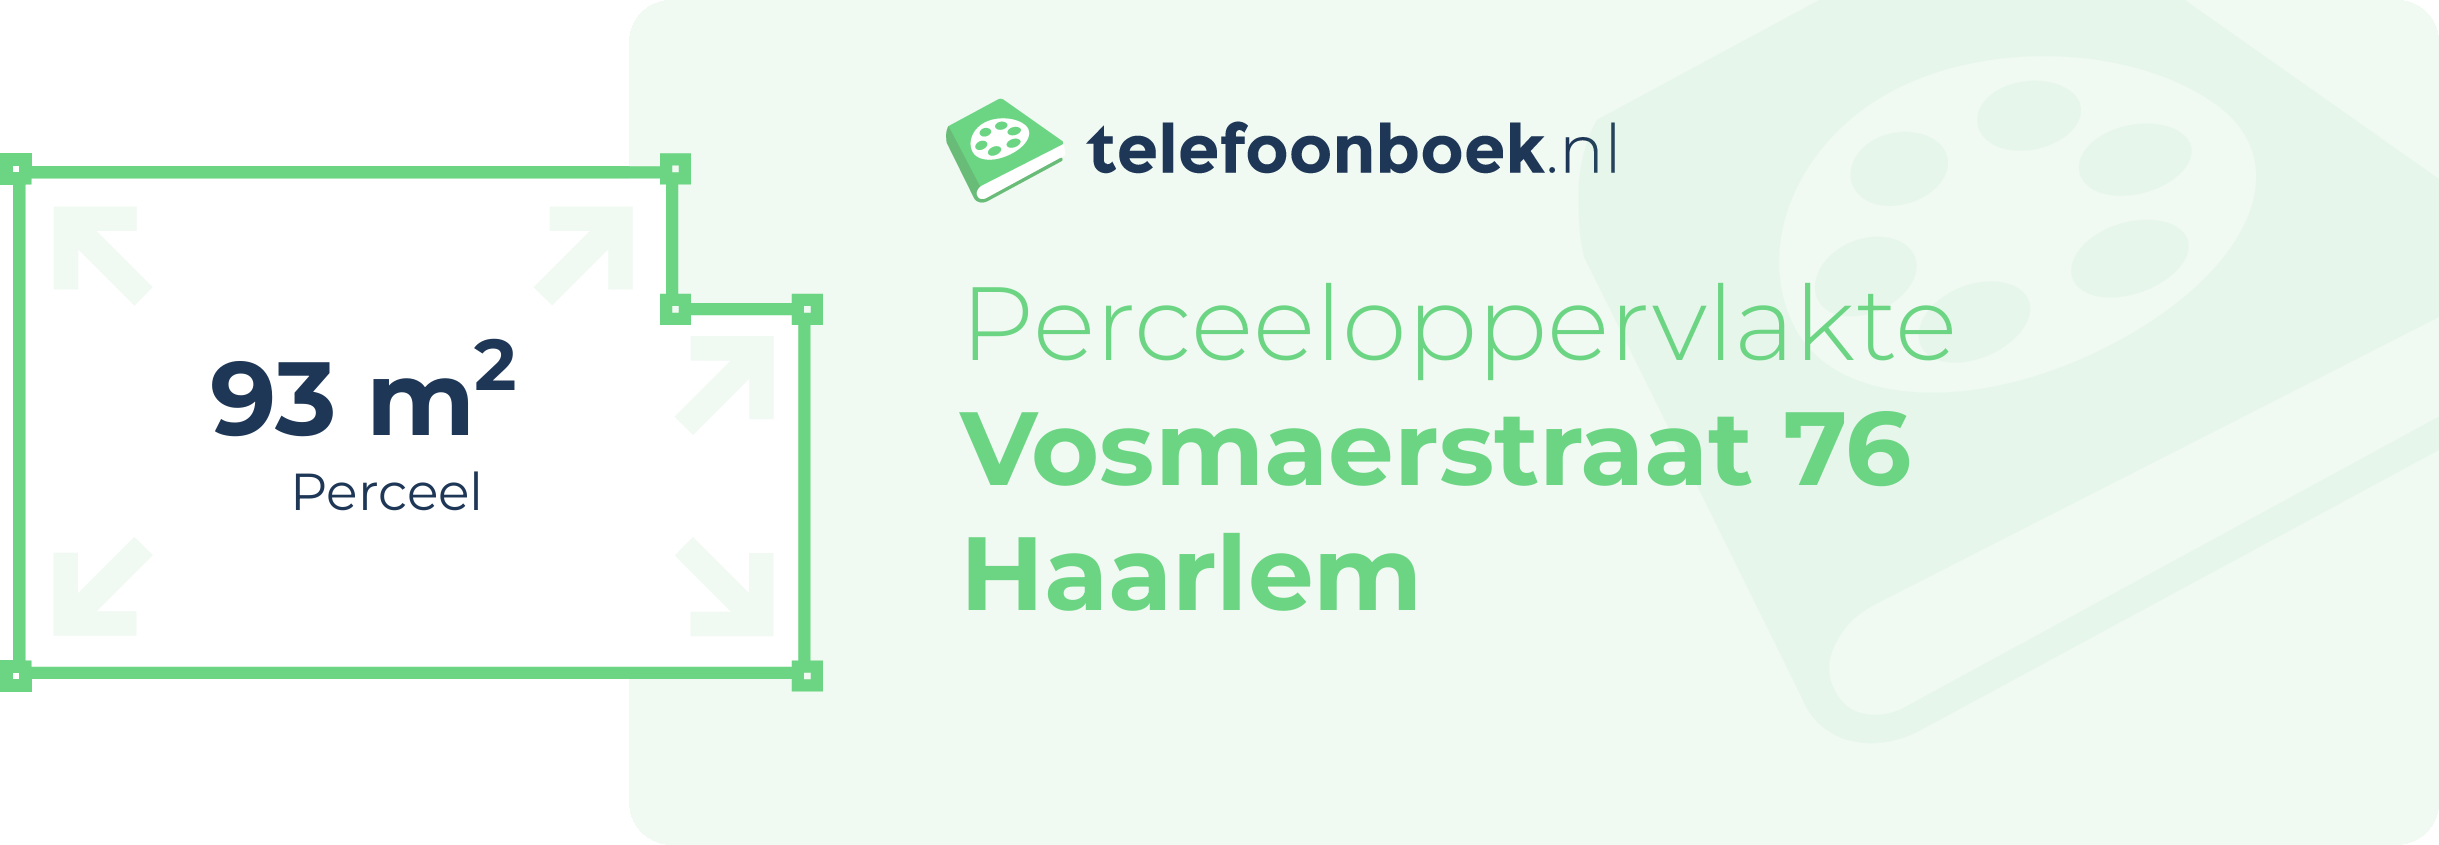 Perceeloppervlakte Vosmaerstraat 76 Haarlem